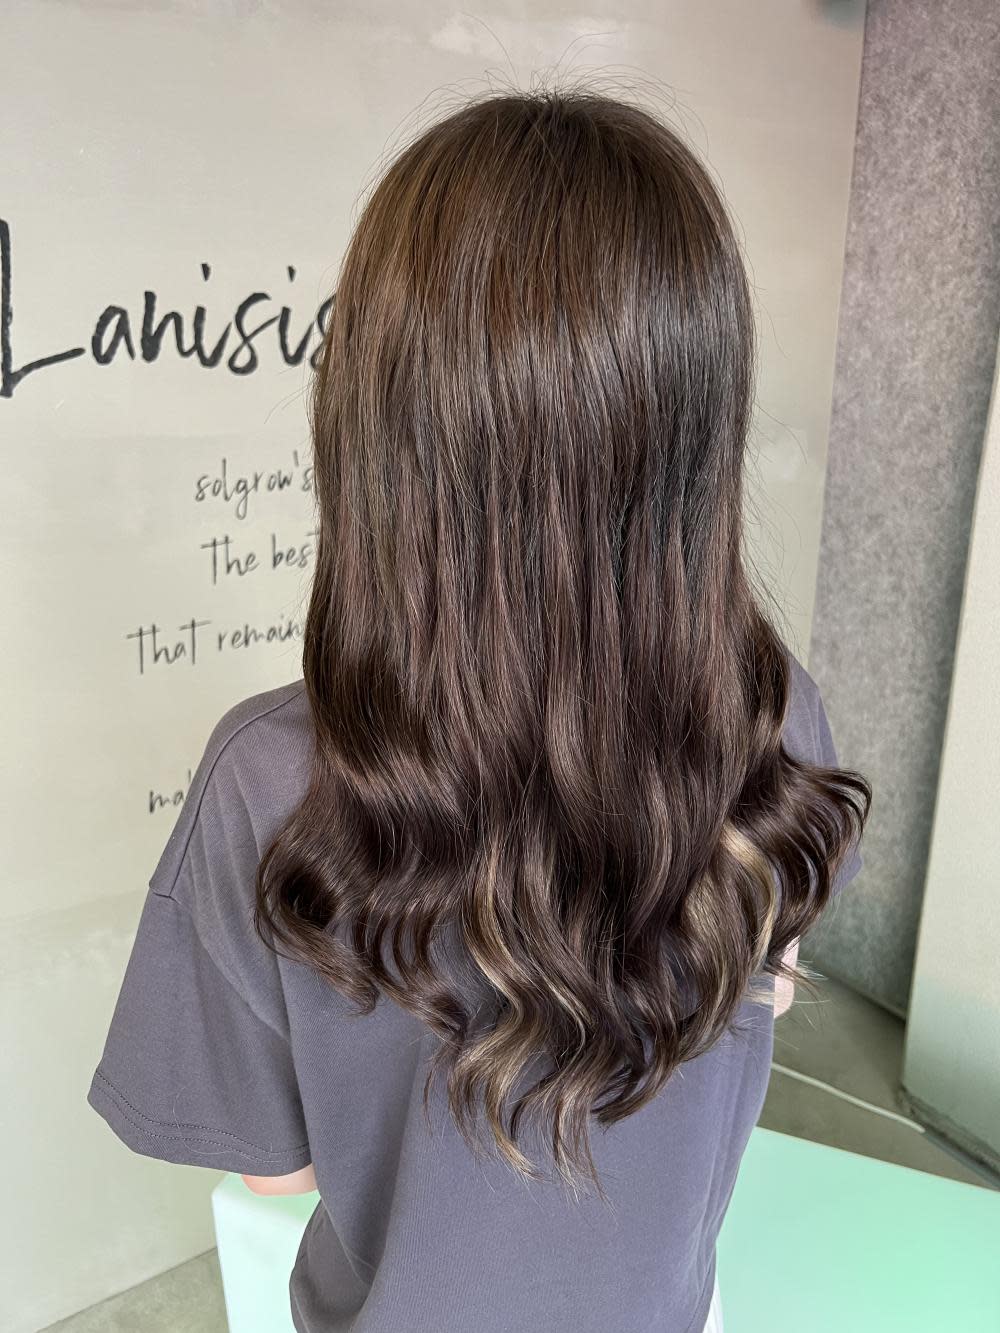 Lanisis Hair【ラニシス ヘアー】のスタイル紹介。#髪質改善#インナーカラー#エクステ#ヘアセット#縮毛矯正